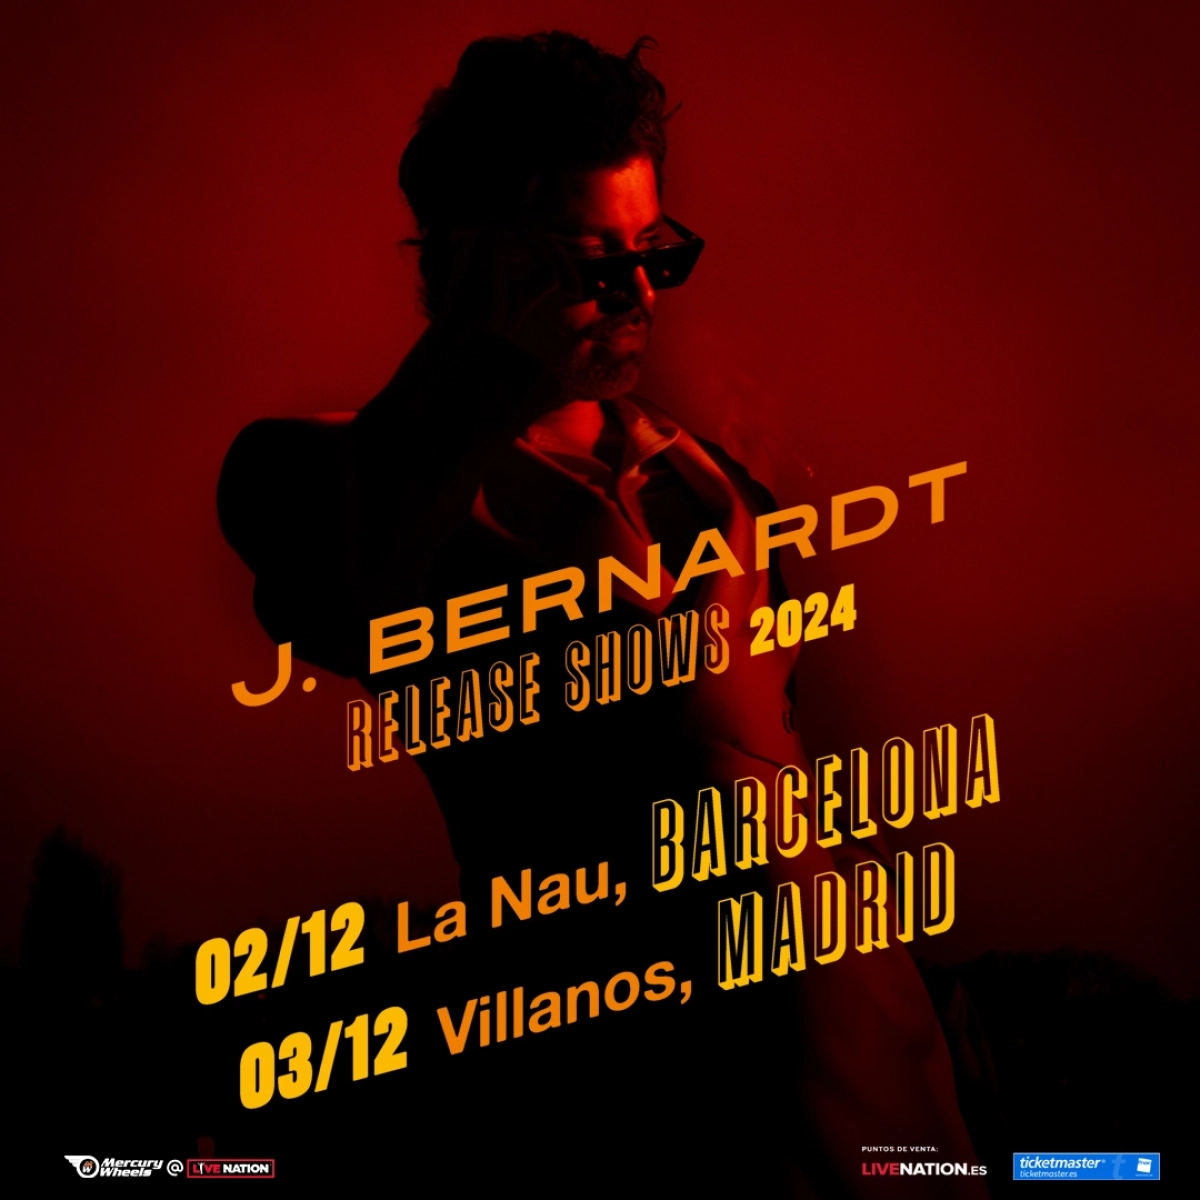 J. Bernardt at La Nau Tickets